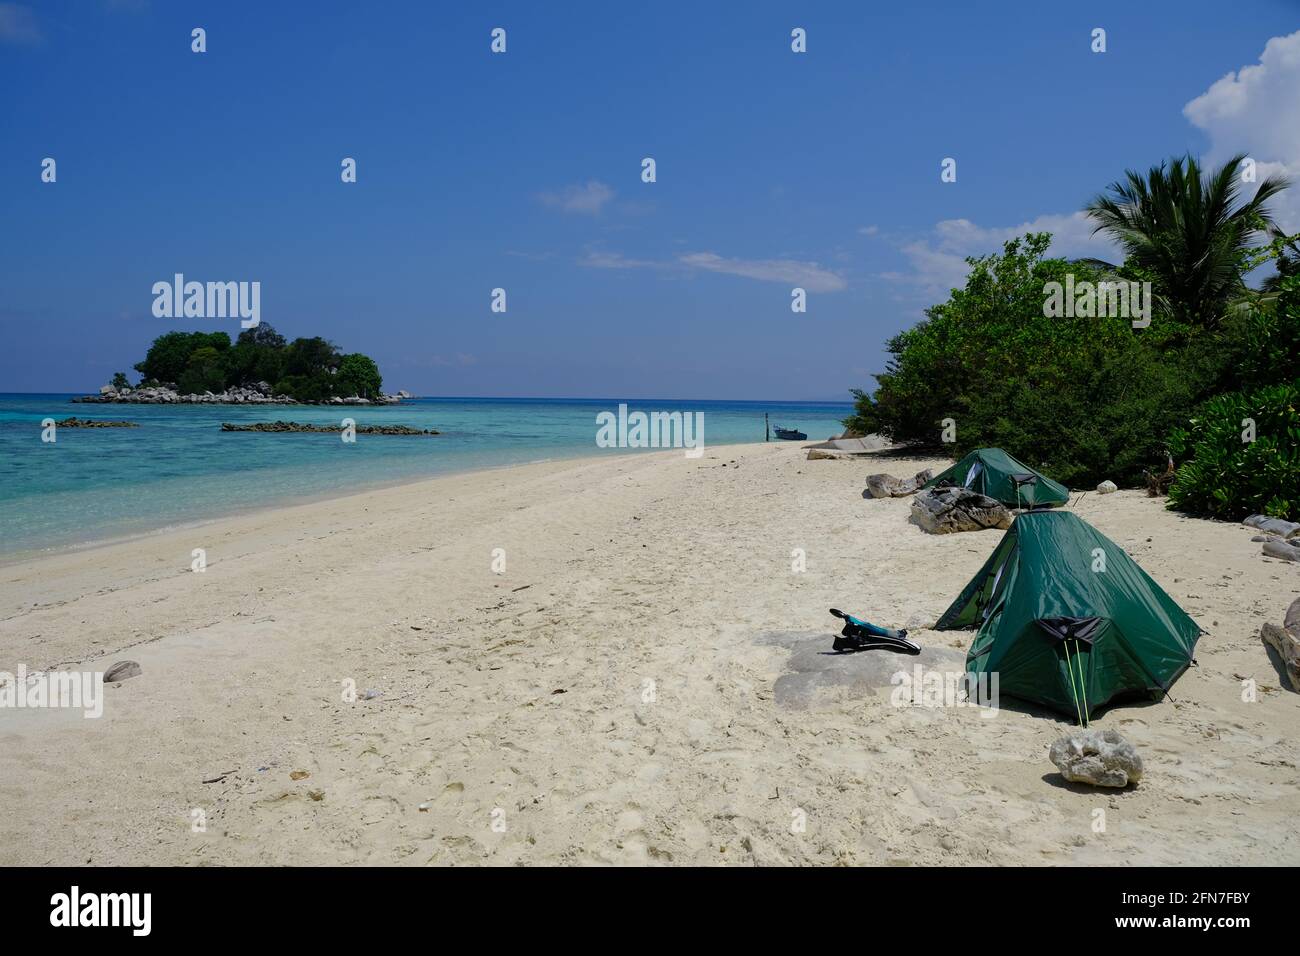 Indonesien Anambas-Inseln - Telaga Island Camping am Strand Stockfoto